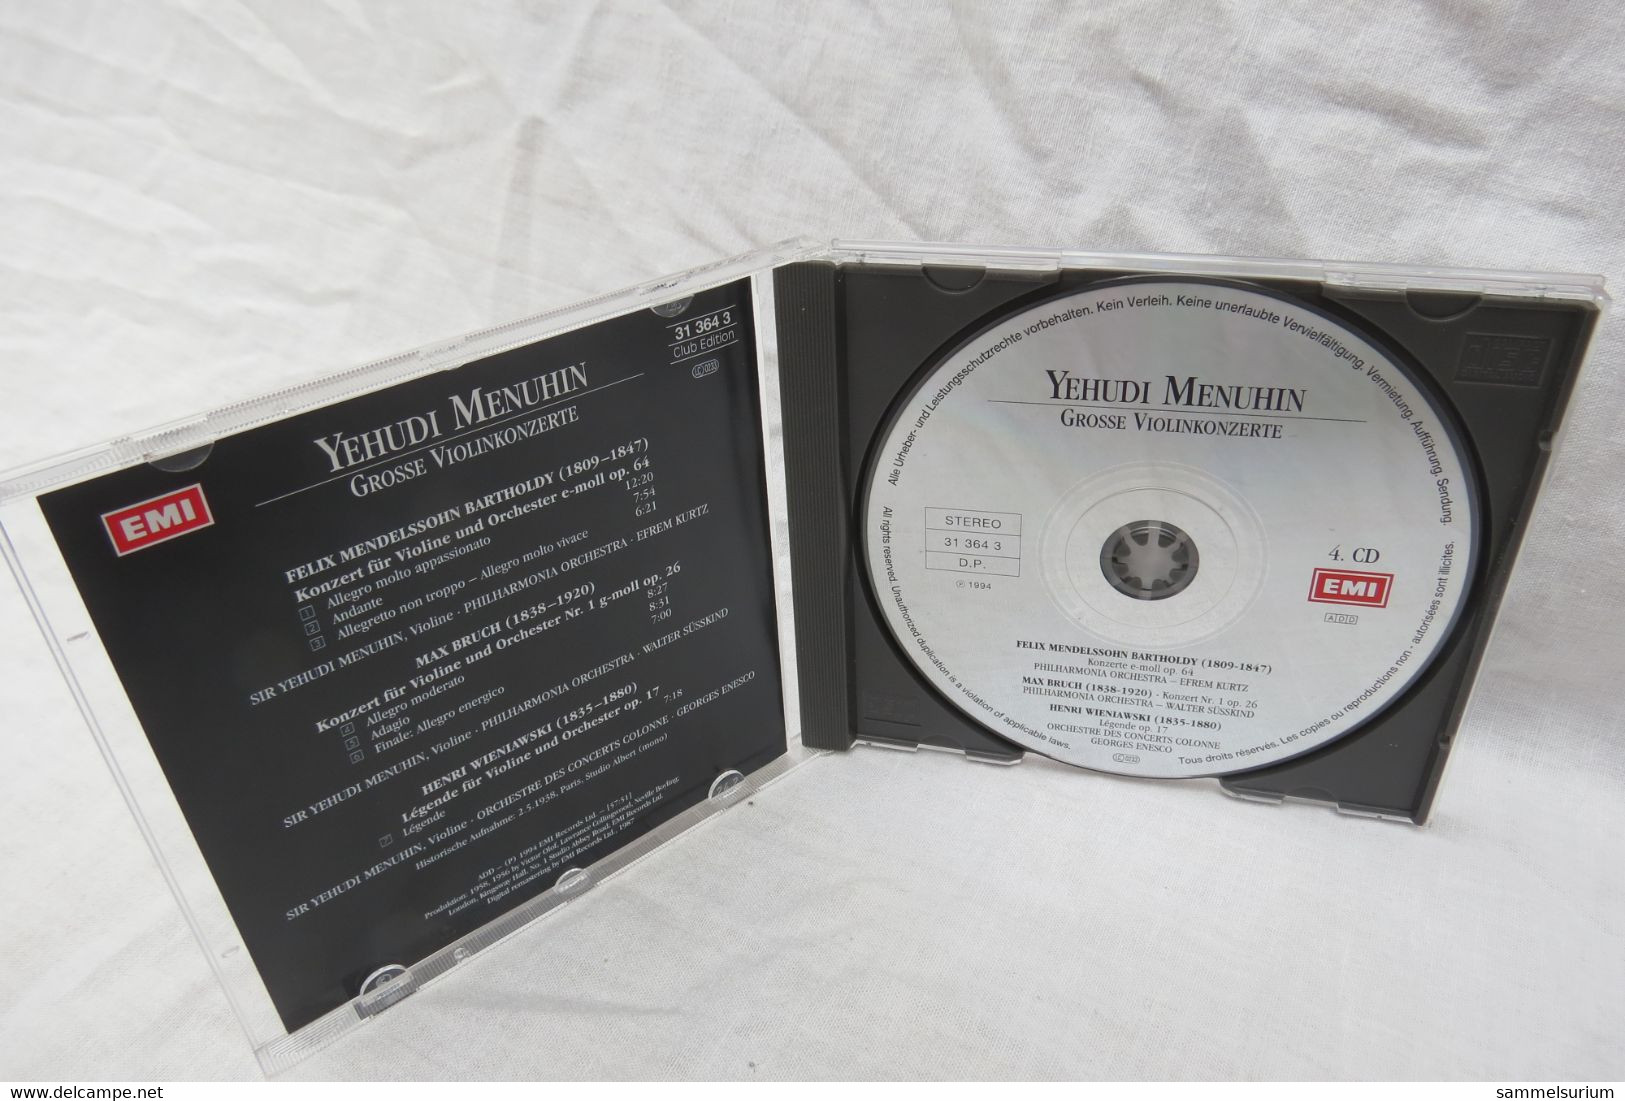 5 CDs "Yehudi Menuhin" Grosse Violinkonzerte